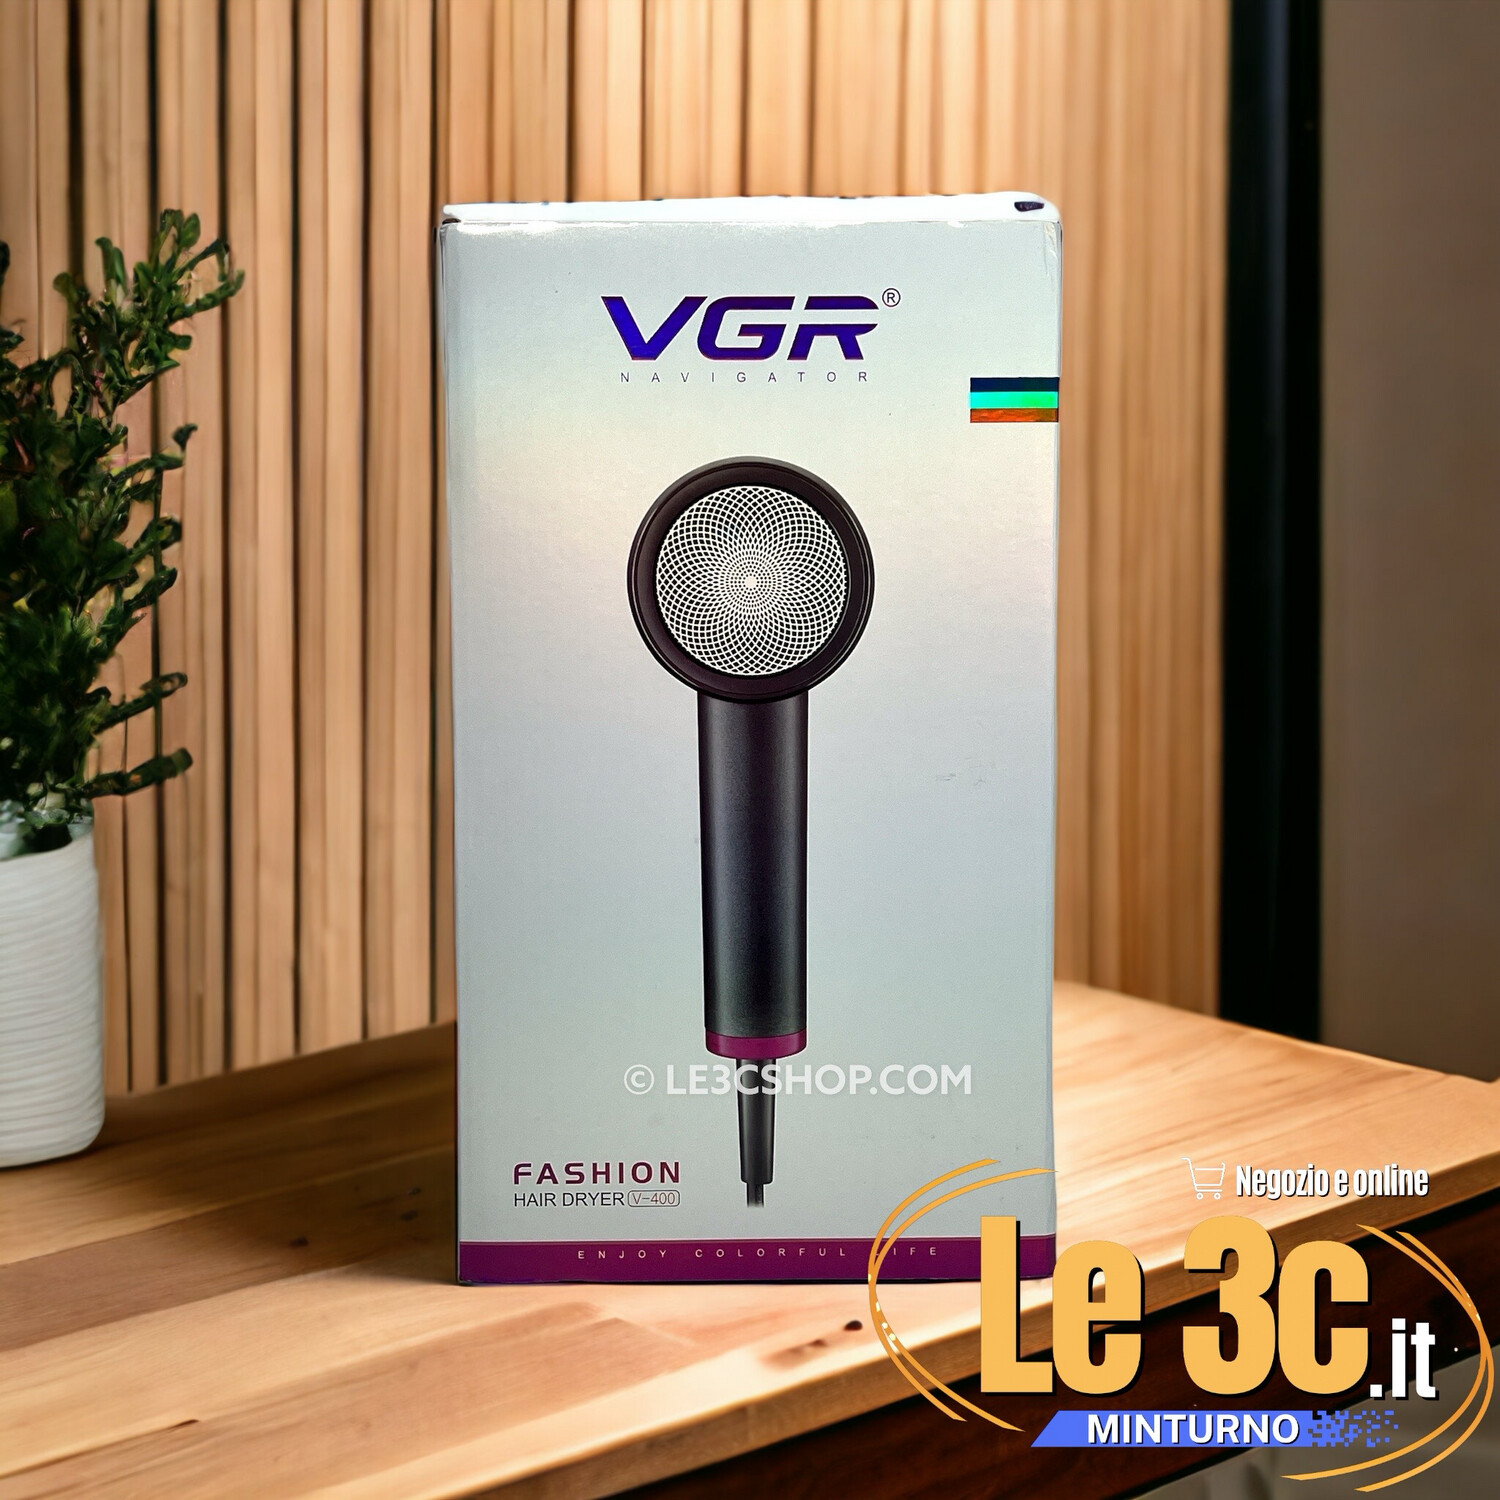 Asciugacapelli VGR V-400: 1600-2000W Hair Dryver.